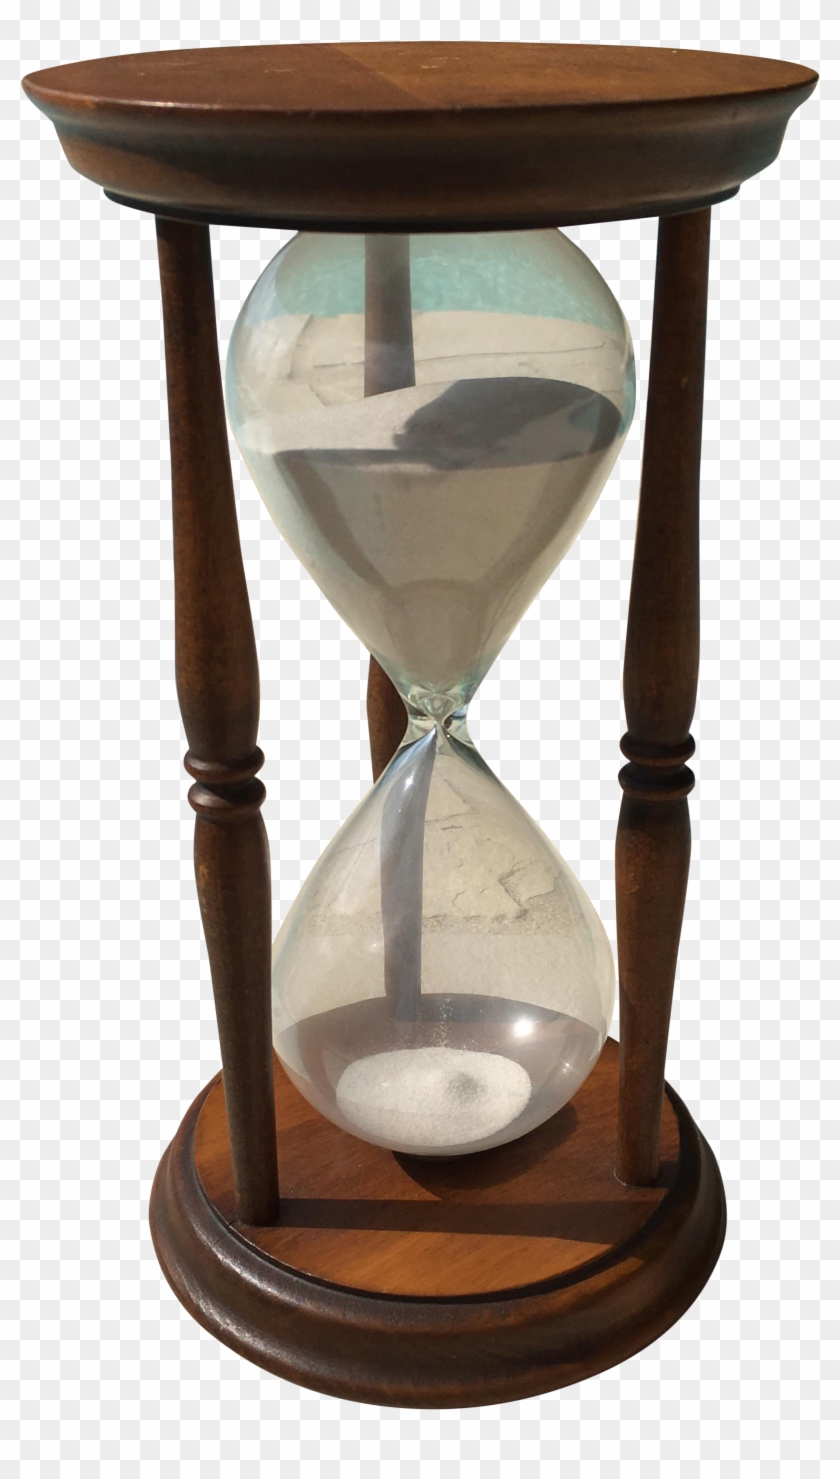 1781 X 3052 11 - Vintage Sand Clock Png Clipart #1000418